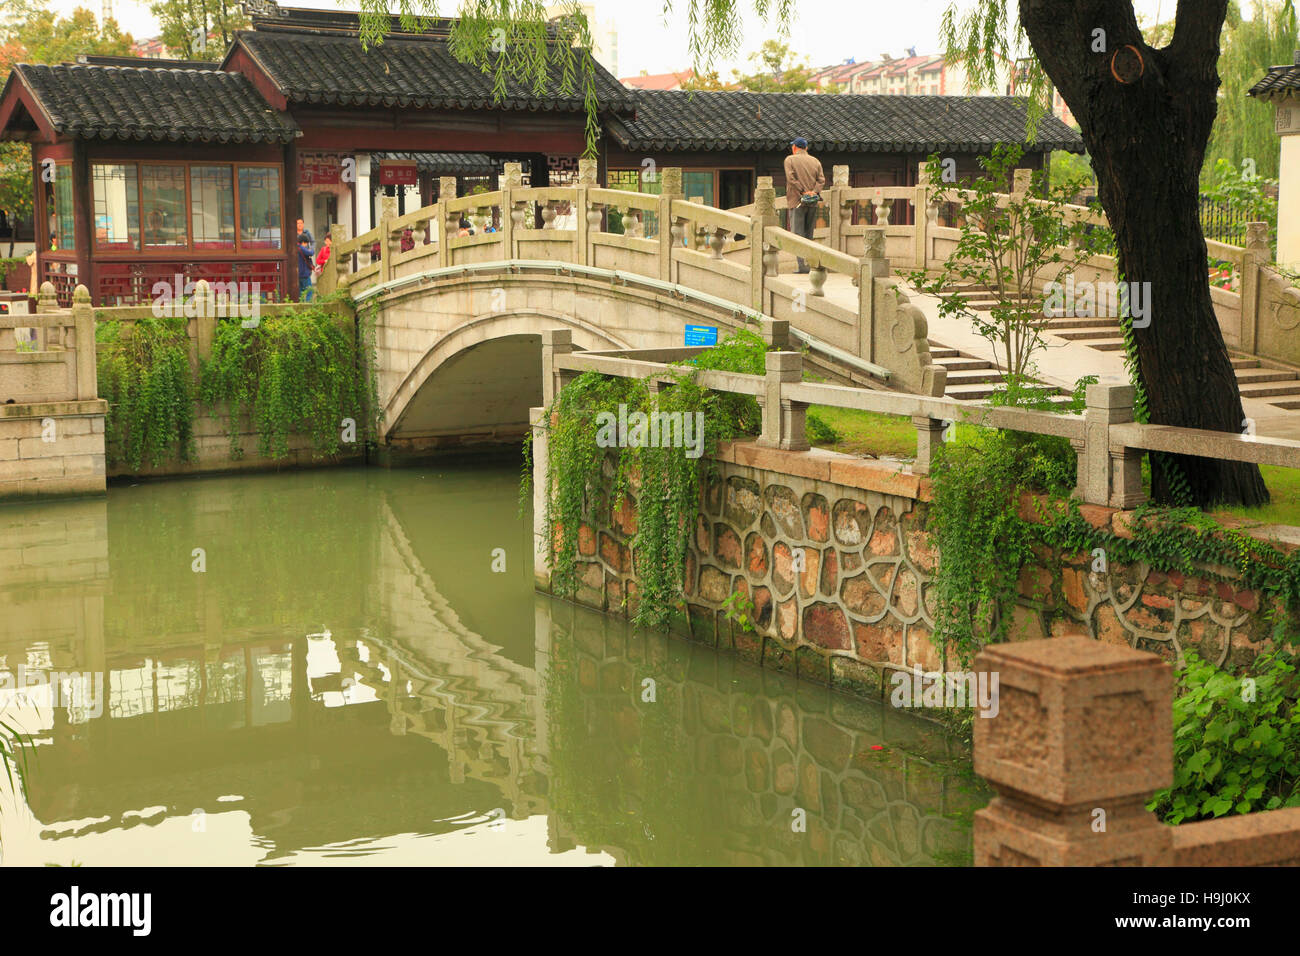 China, Jiangsu, Suzhou, canal scene, bridge, Stock Photo